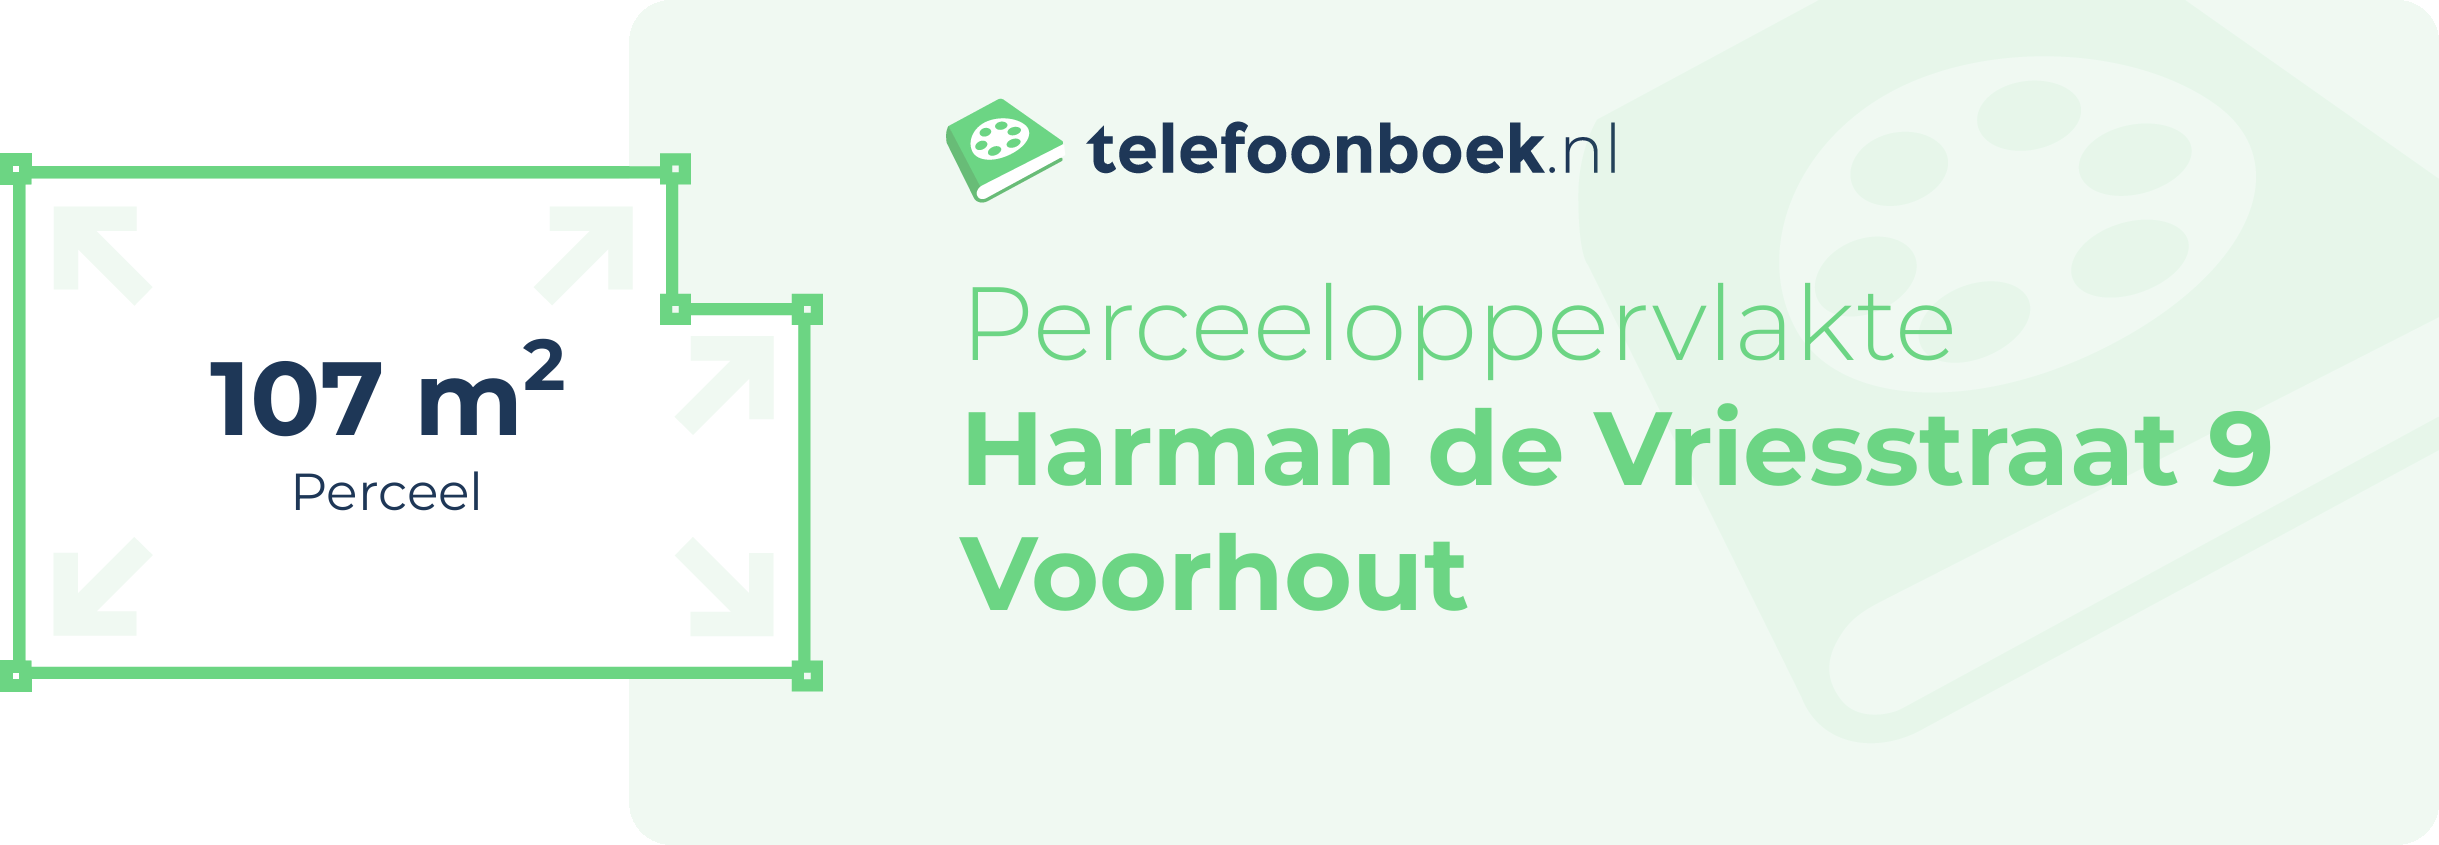 Perceeloppervlakte Harman De Vriesstraat 9 Voorhout